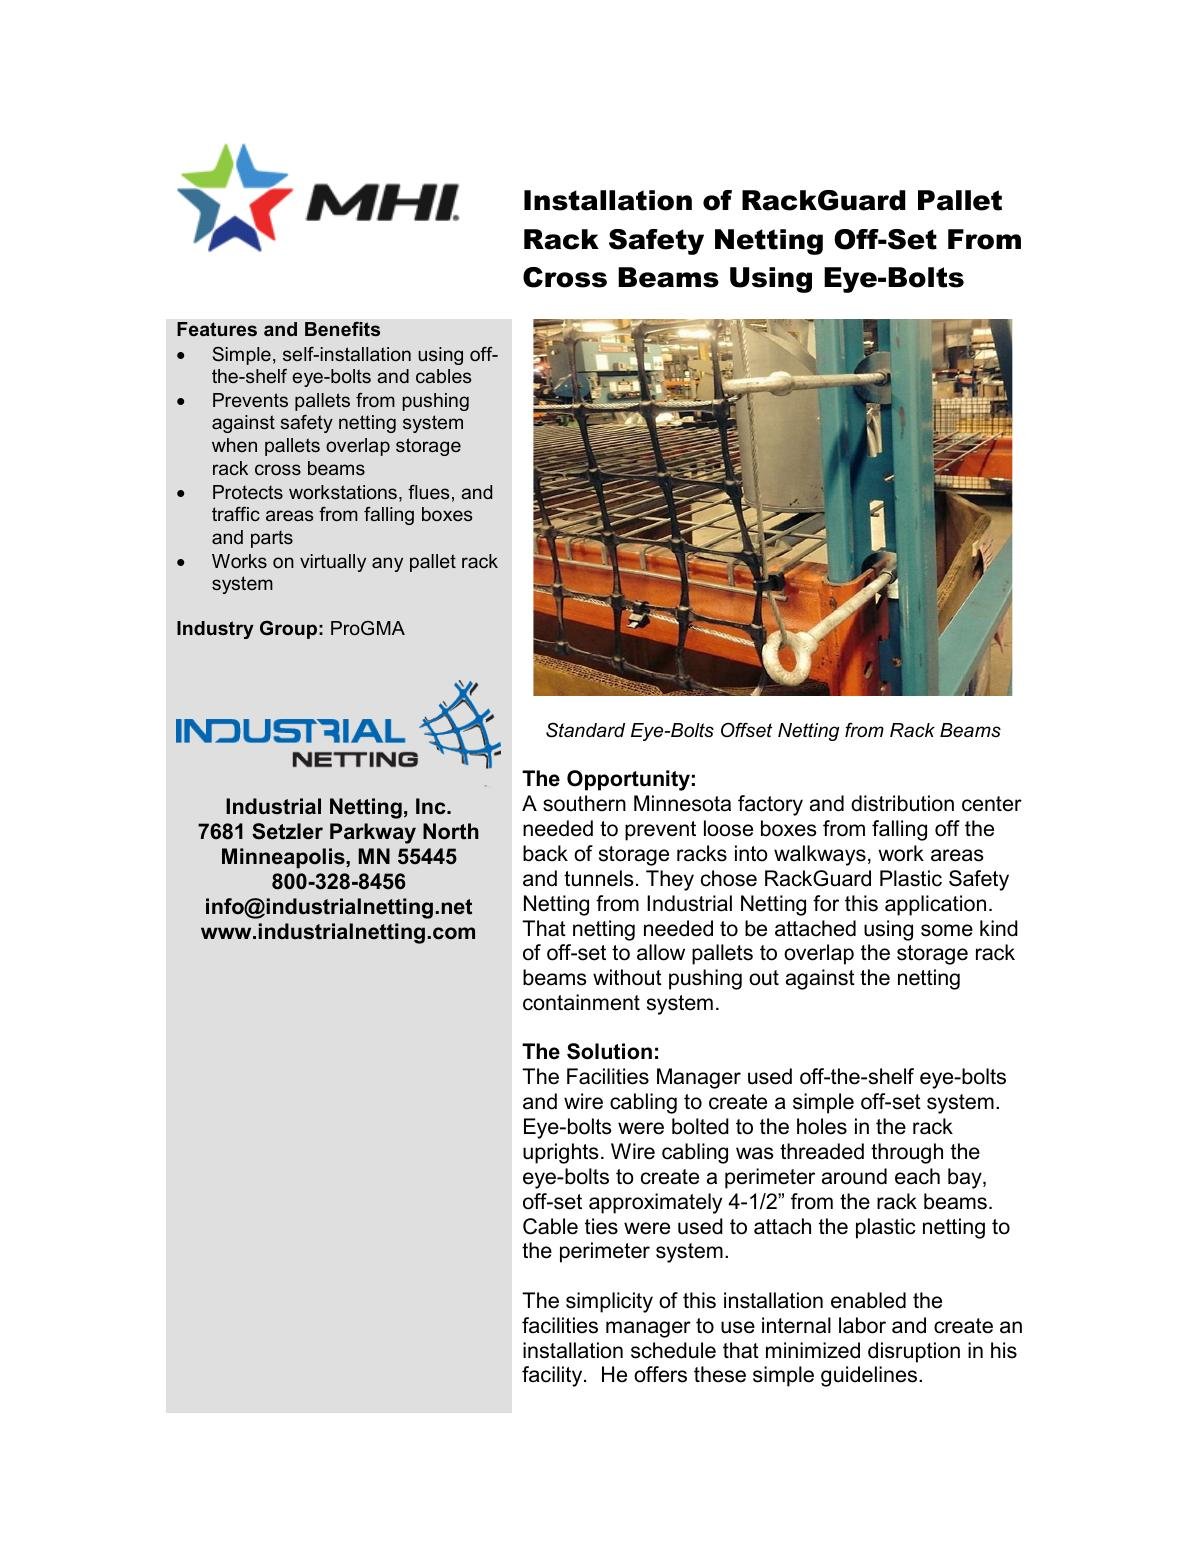 Pallet Rack Safety Netting Installation